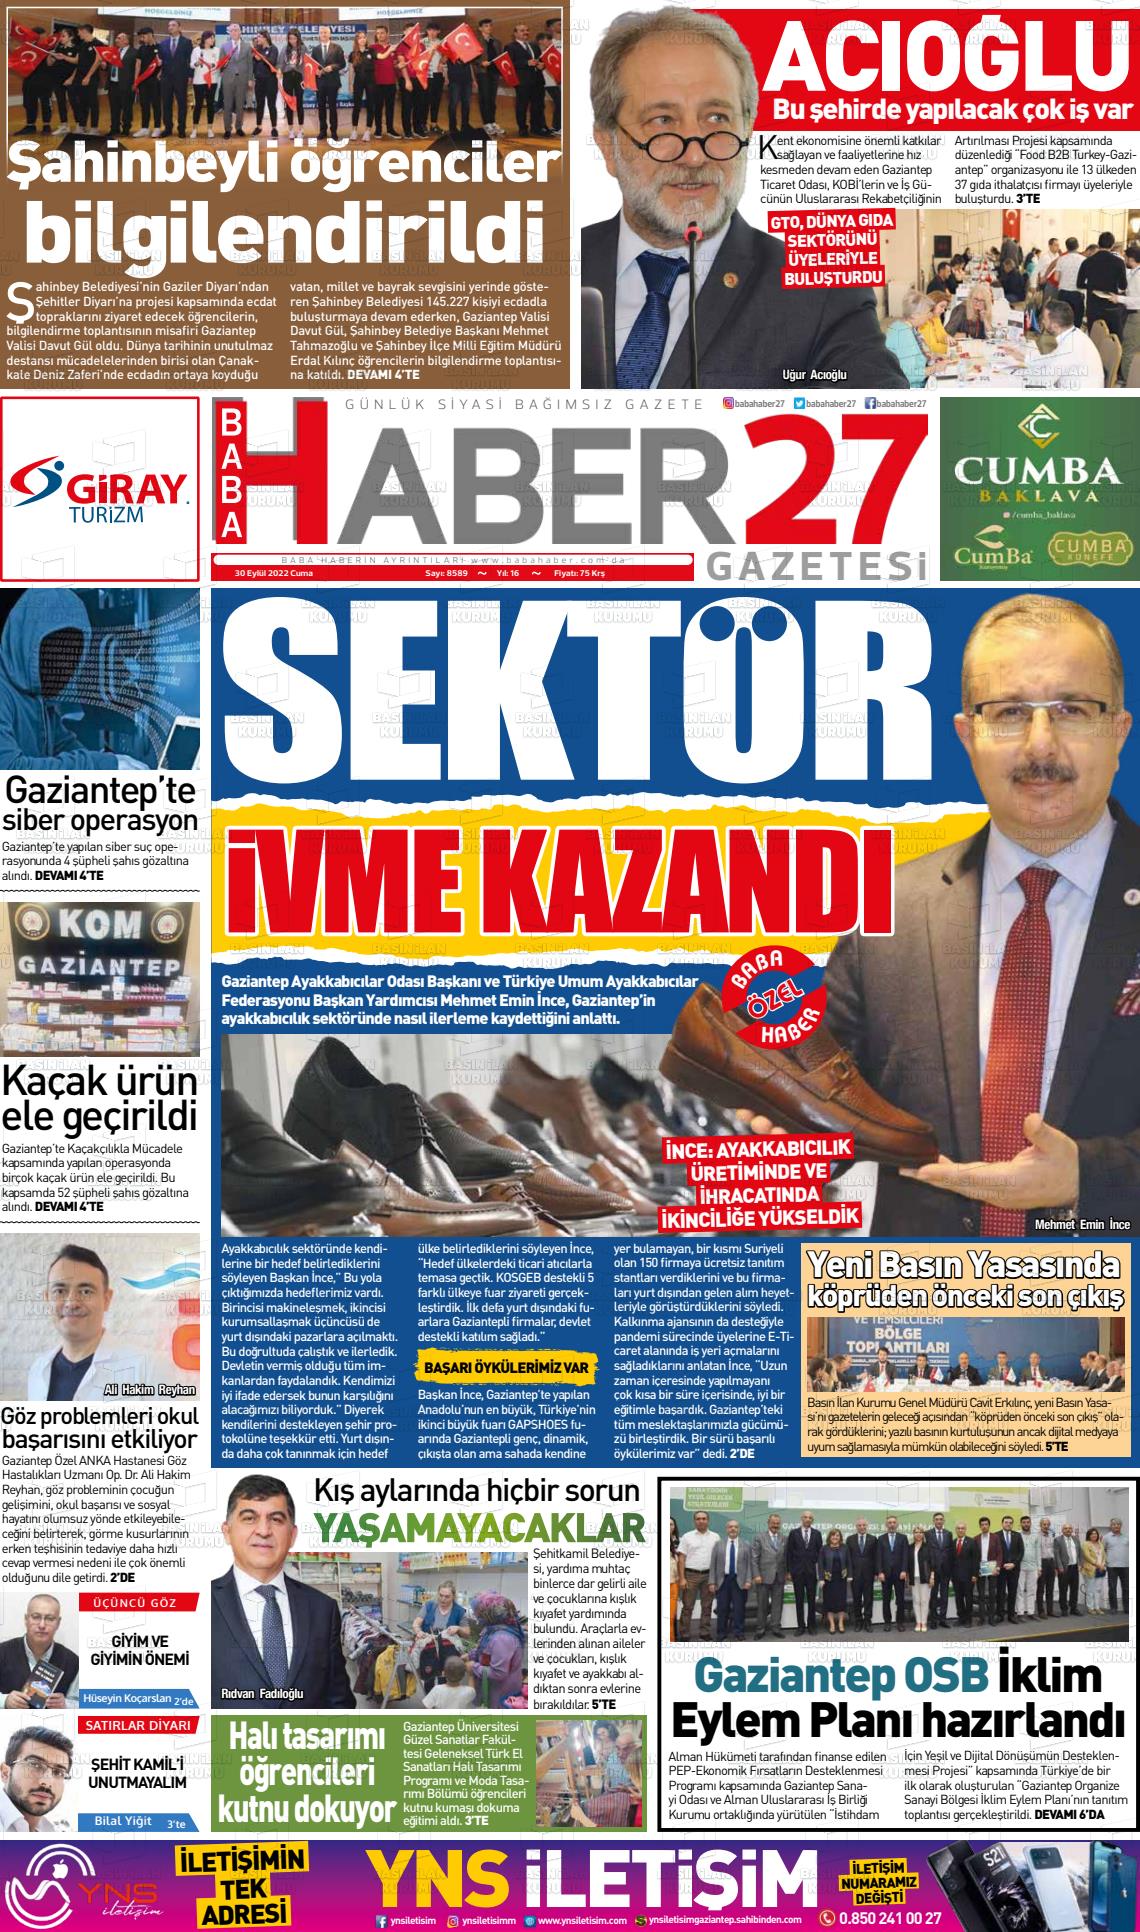 30 Eylül 2022 Baba Haber Gazete Manşeti